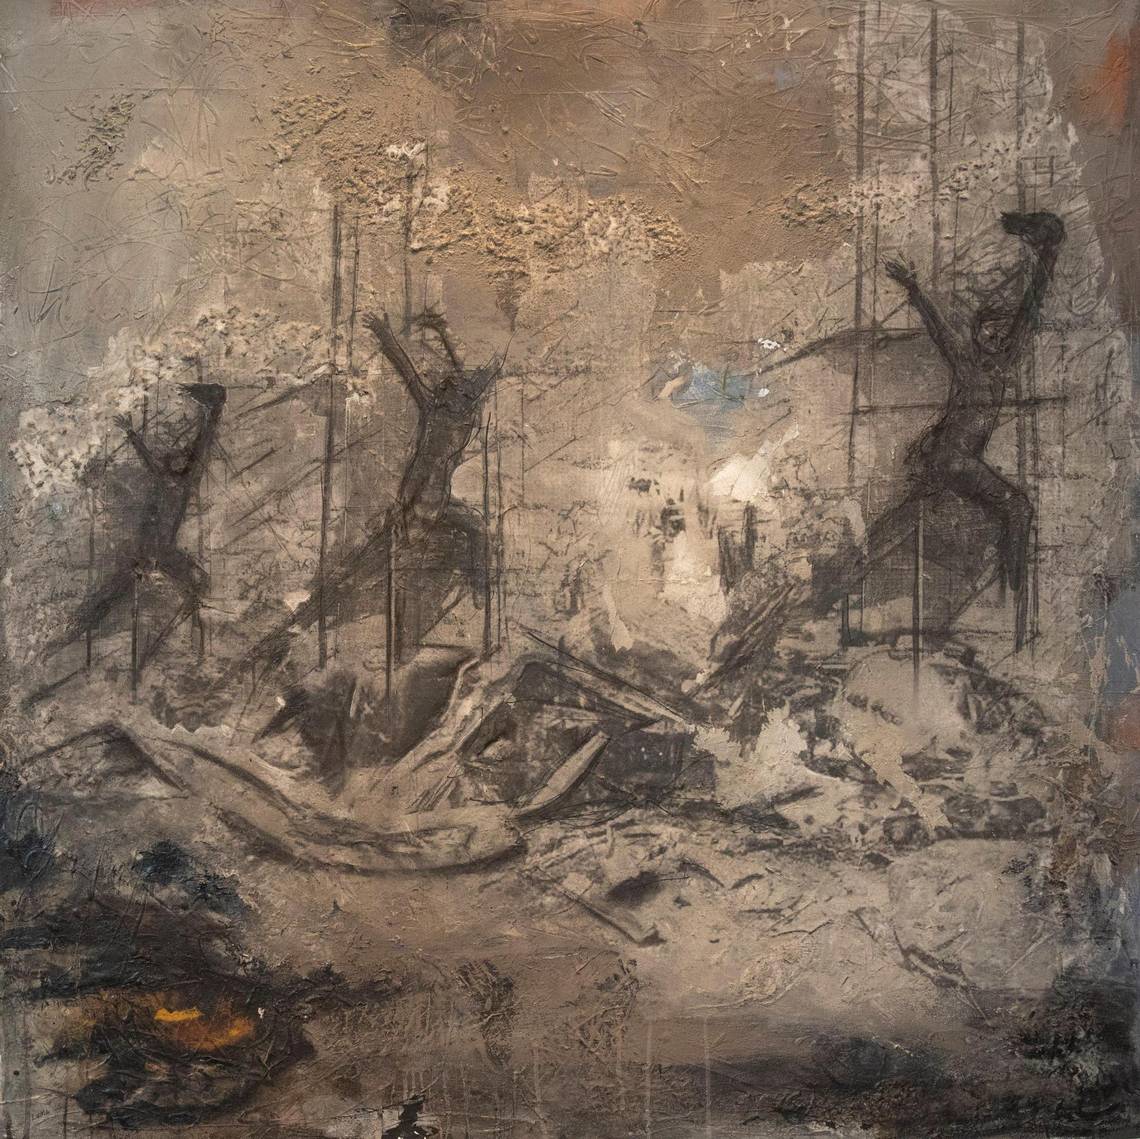 Catastrophe, a painting by Luma Jasim